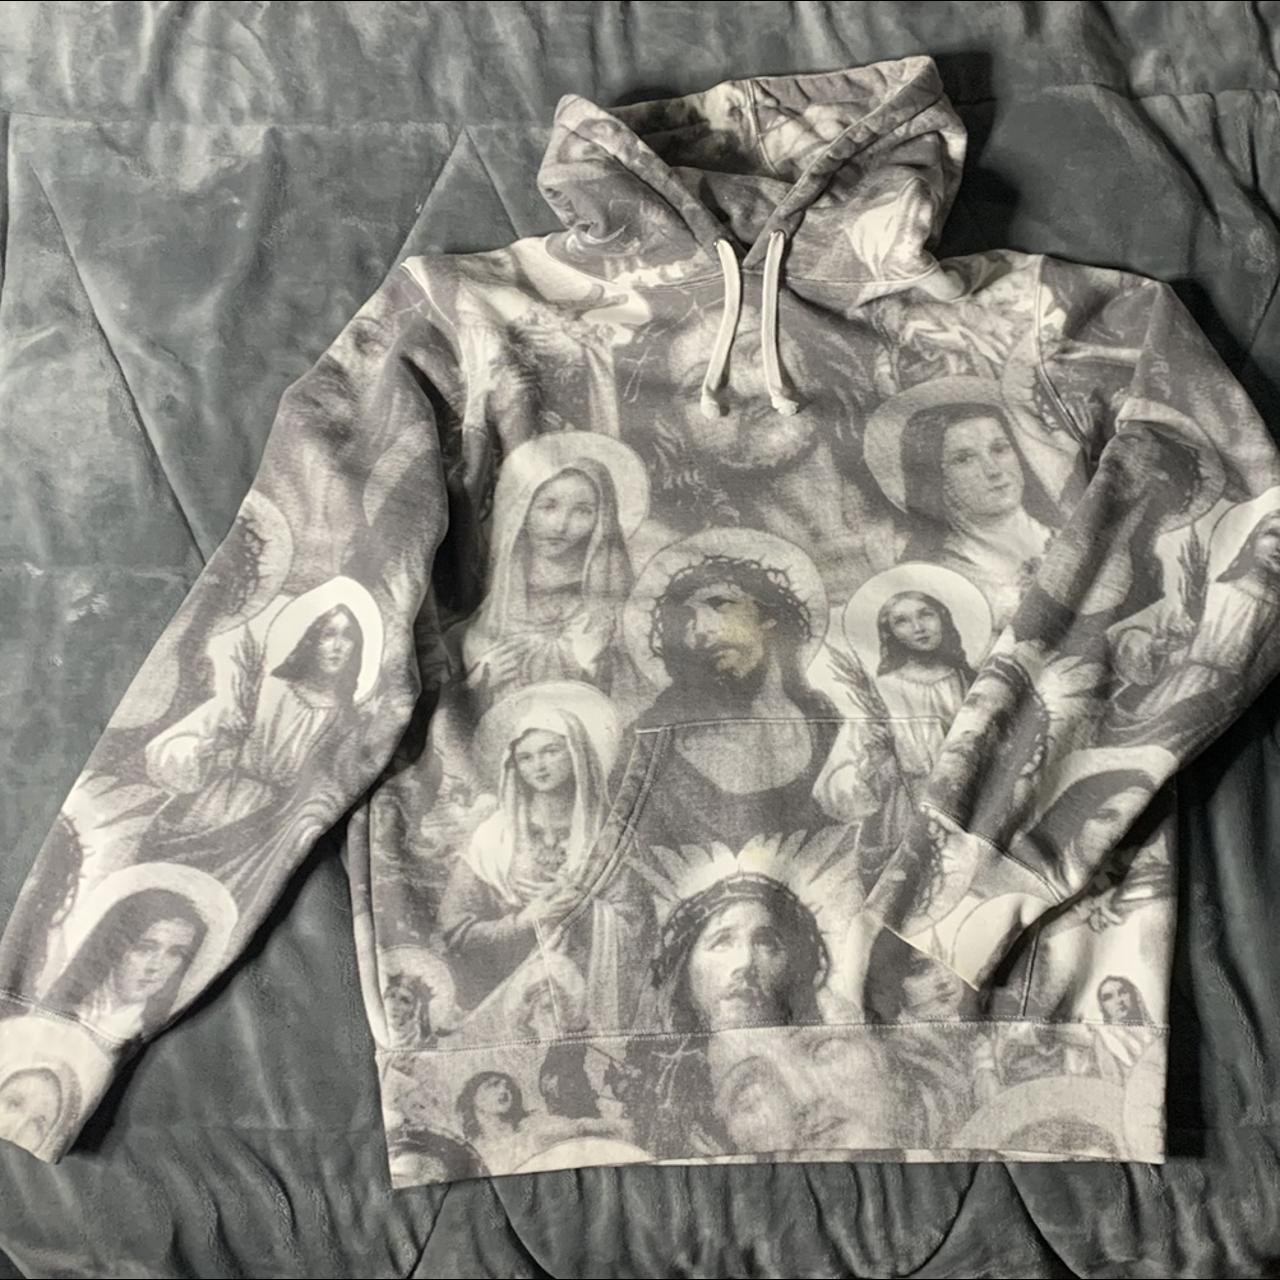 Mサイズ Jesus and Mary Hooded Sweatshirt